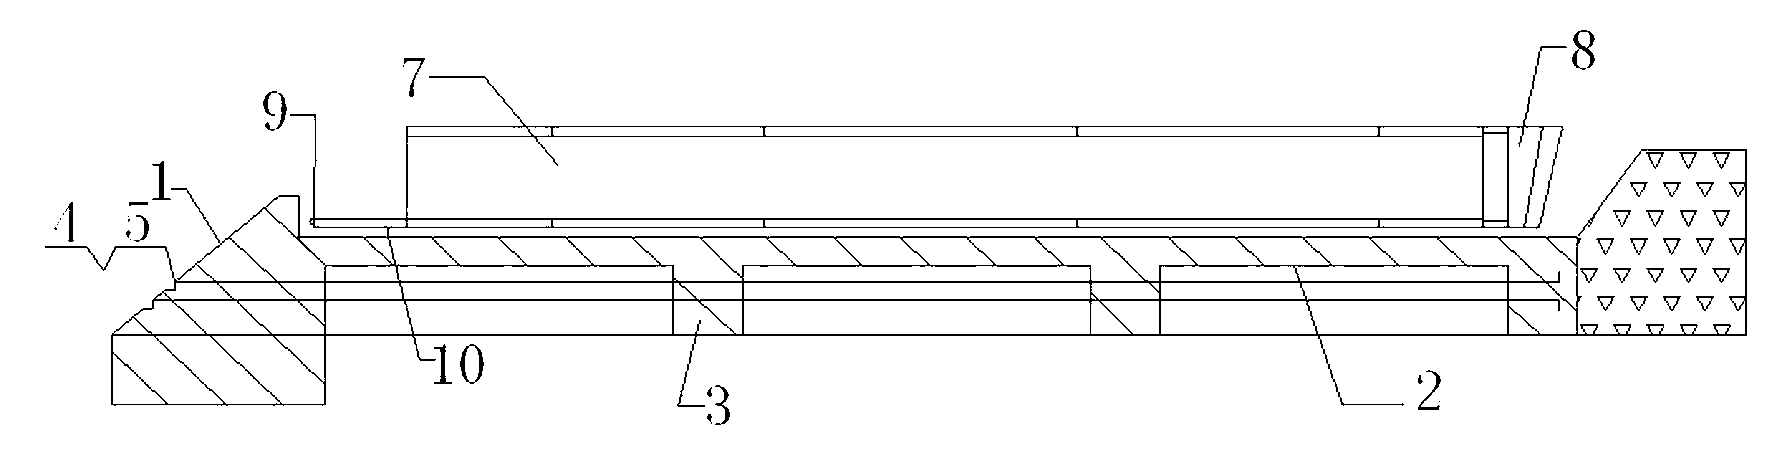 Construction method for making prestressed back for box-culvert jacking